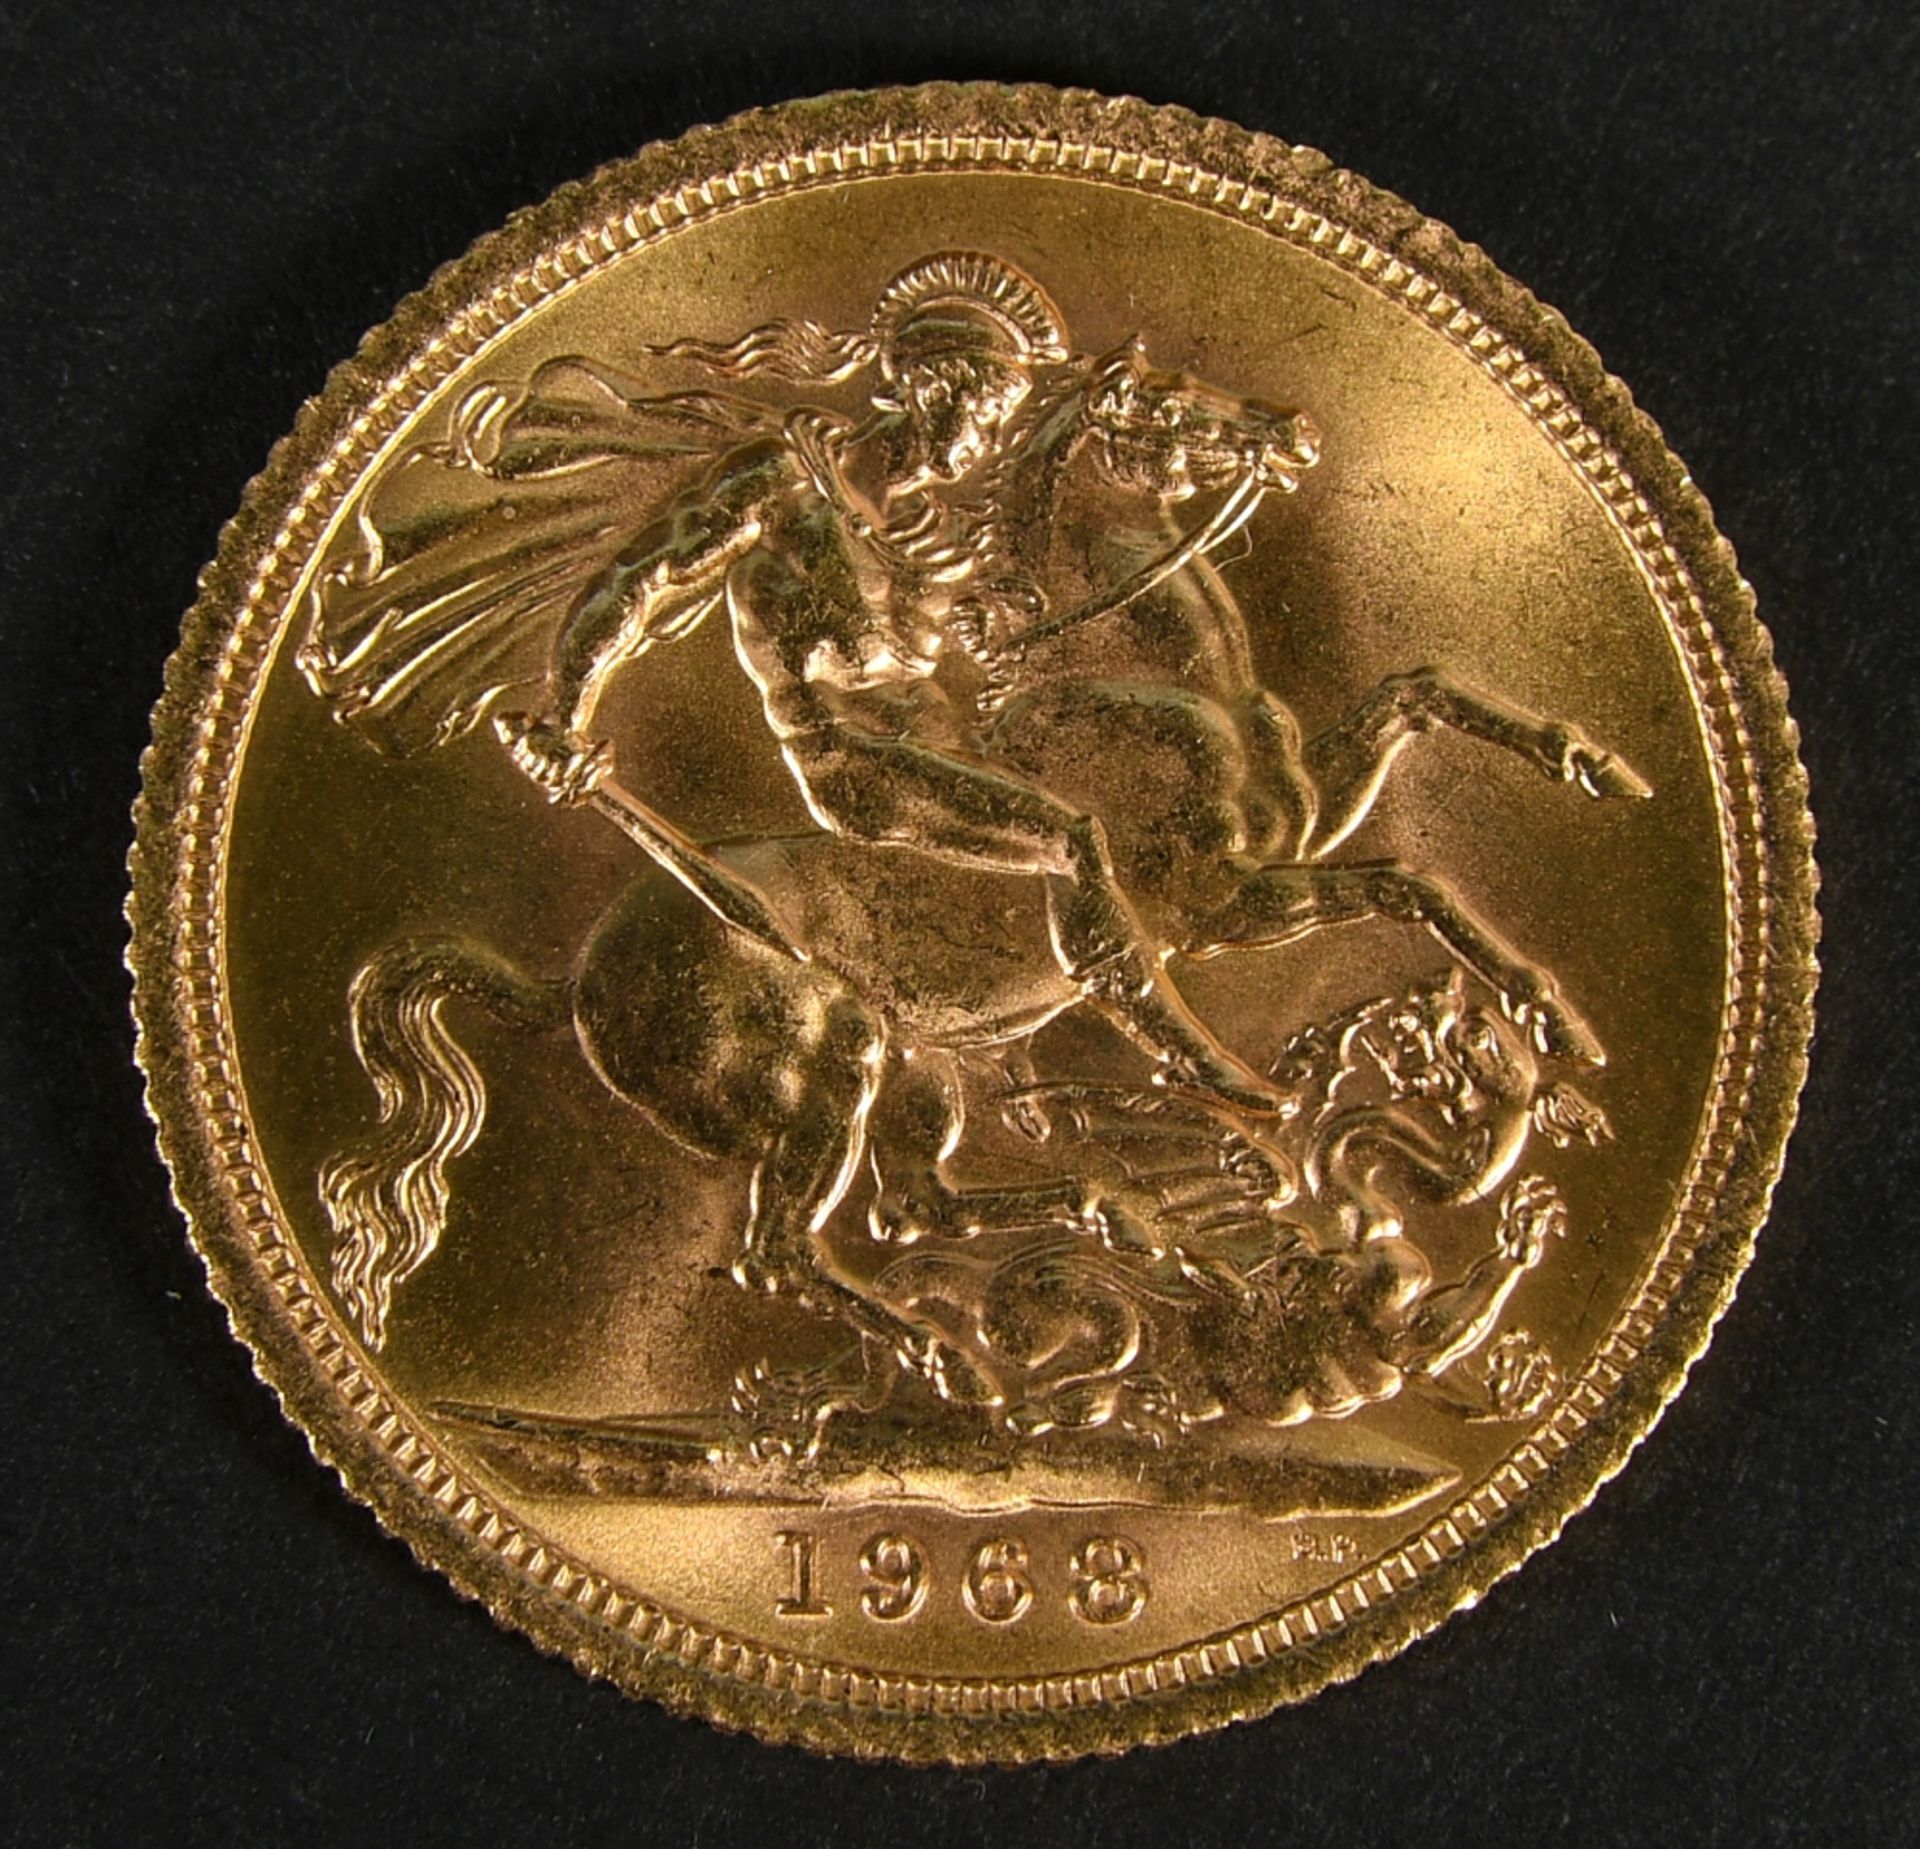 Münze - Goldmünze "1 Sovereign 1968" - Image 3 of 3